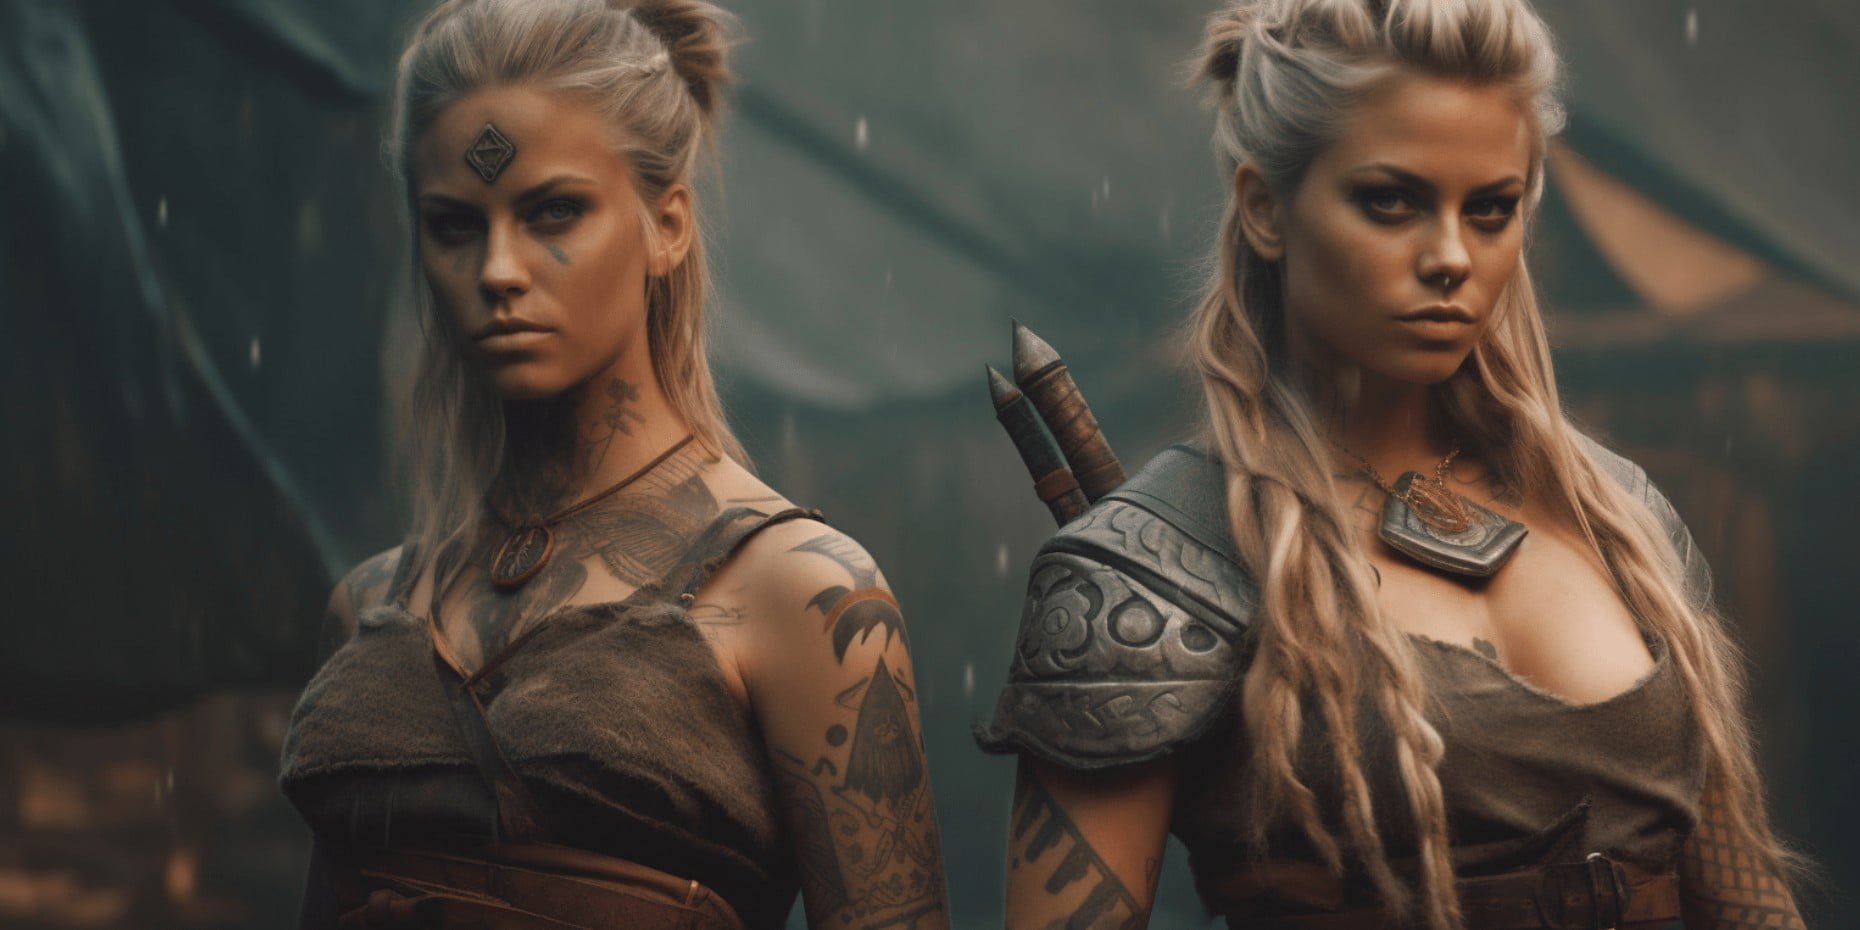 Female viking tattoos